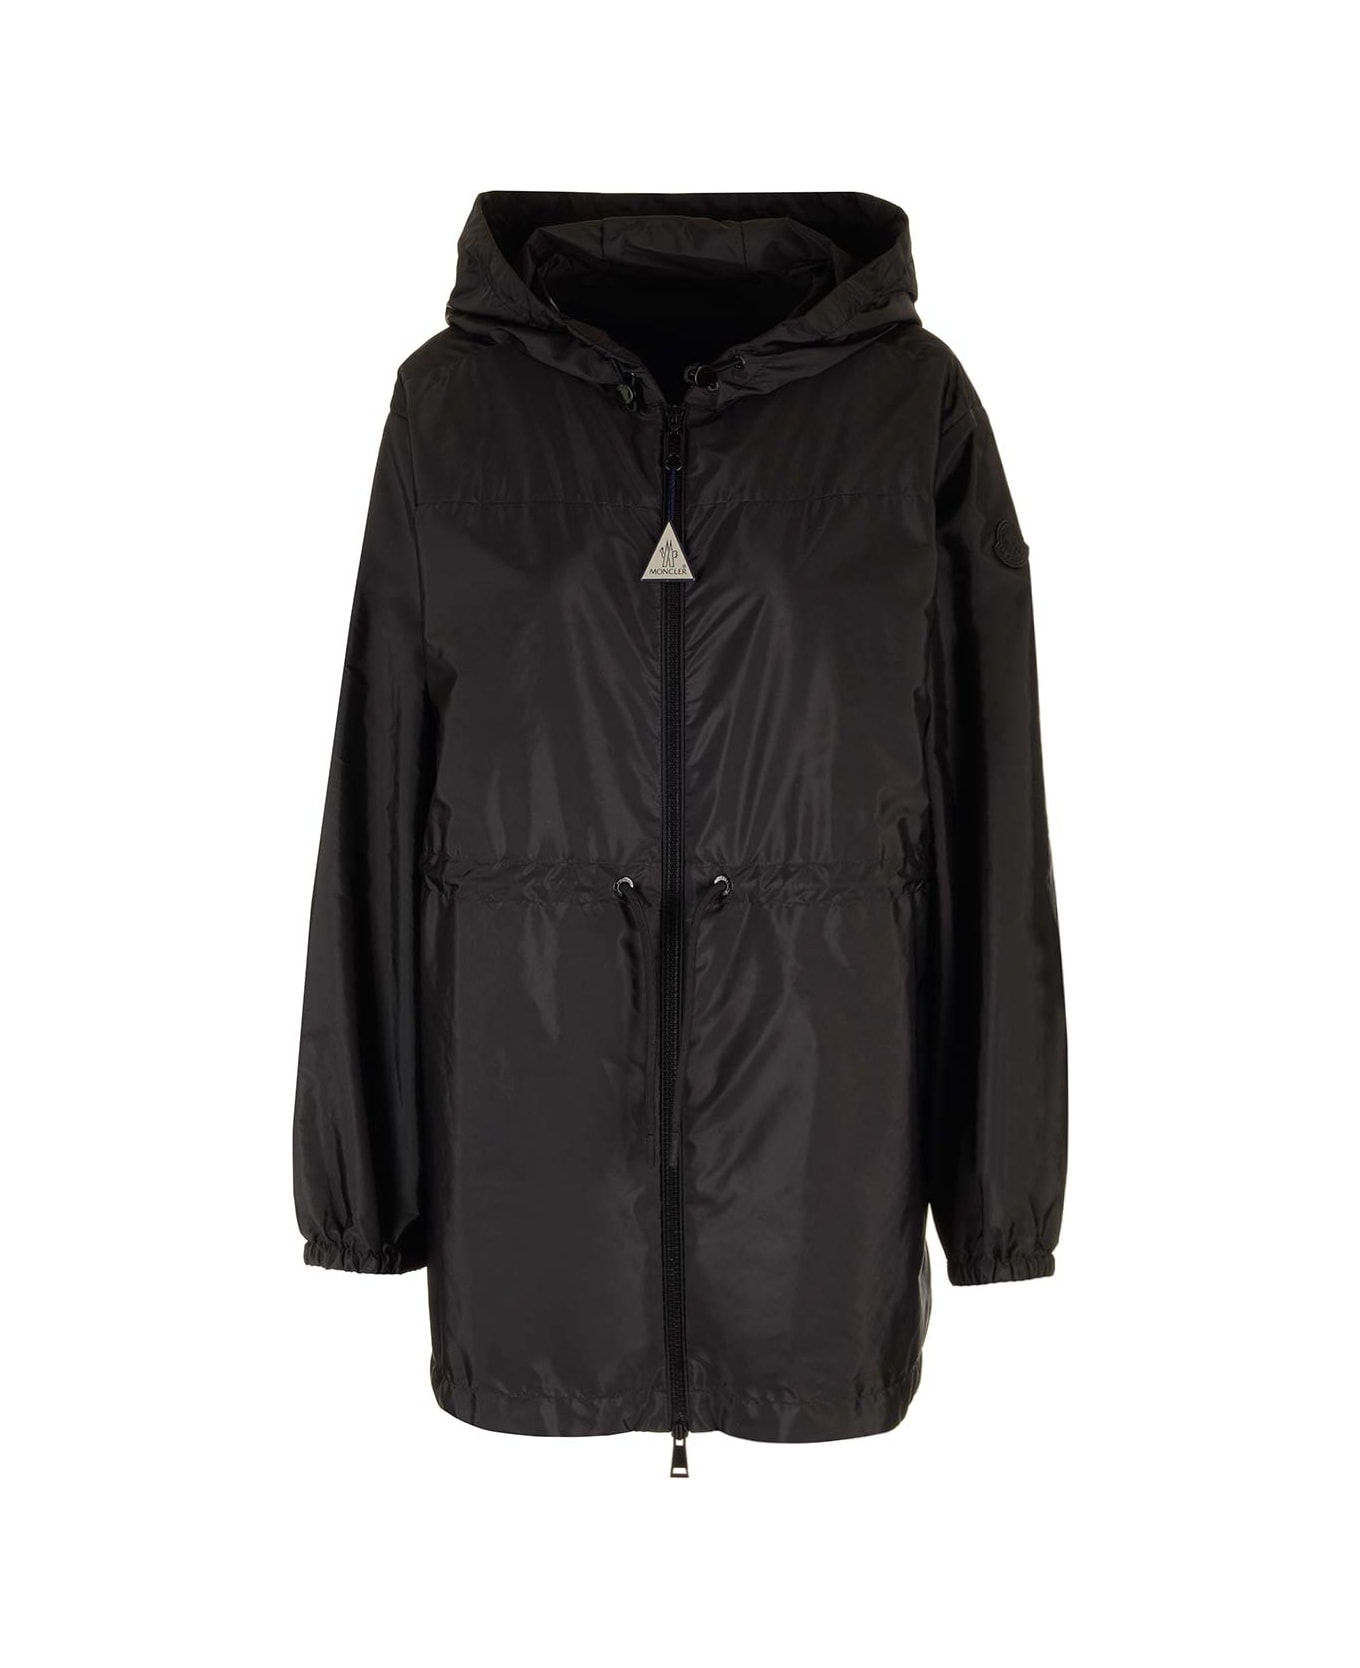 Moncler 'filira' Jacket With Hood - Black レインコート